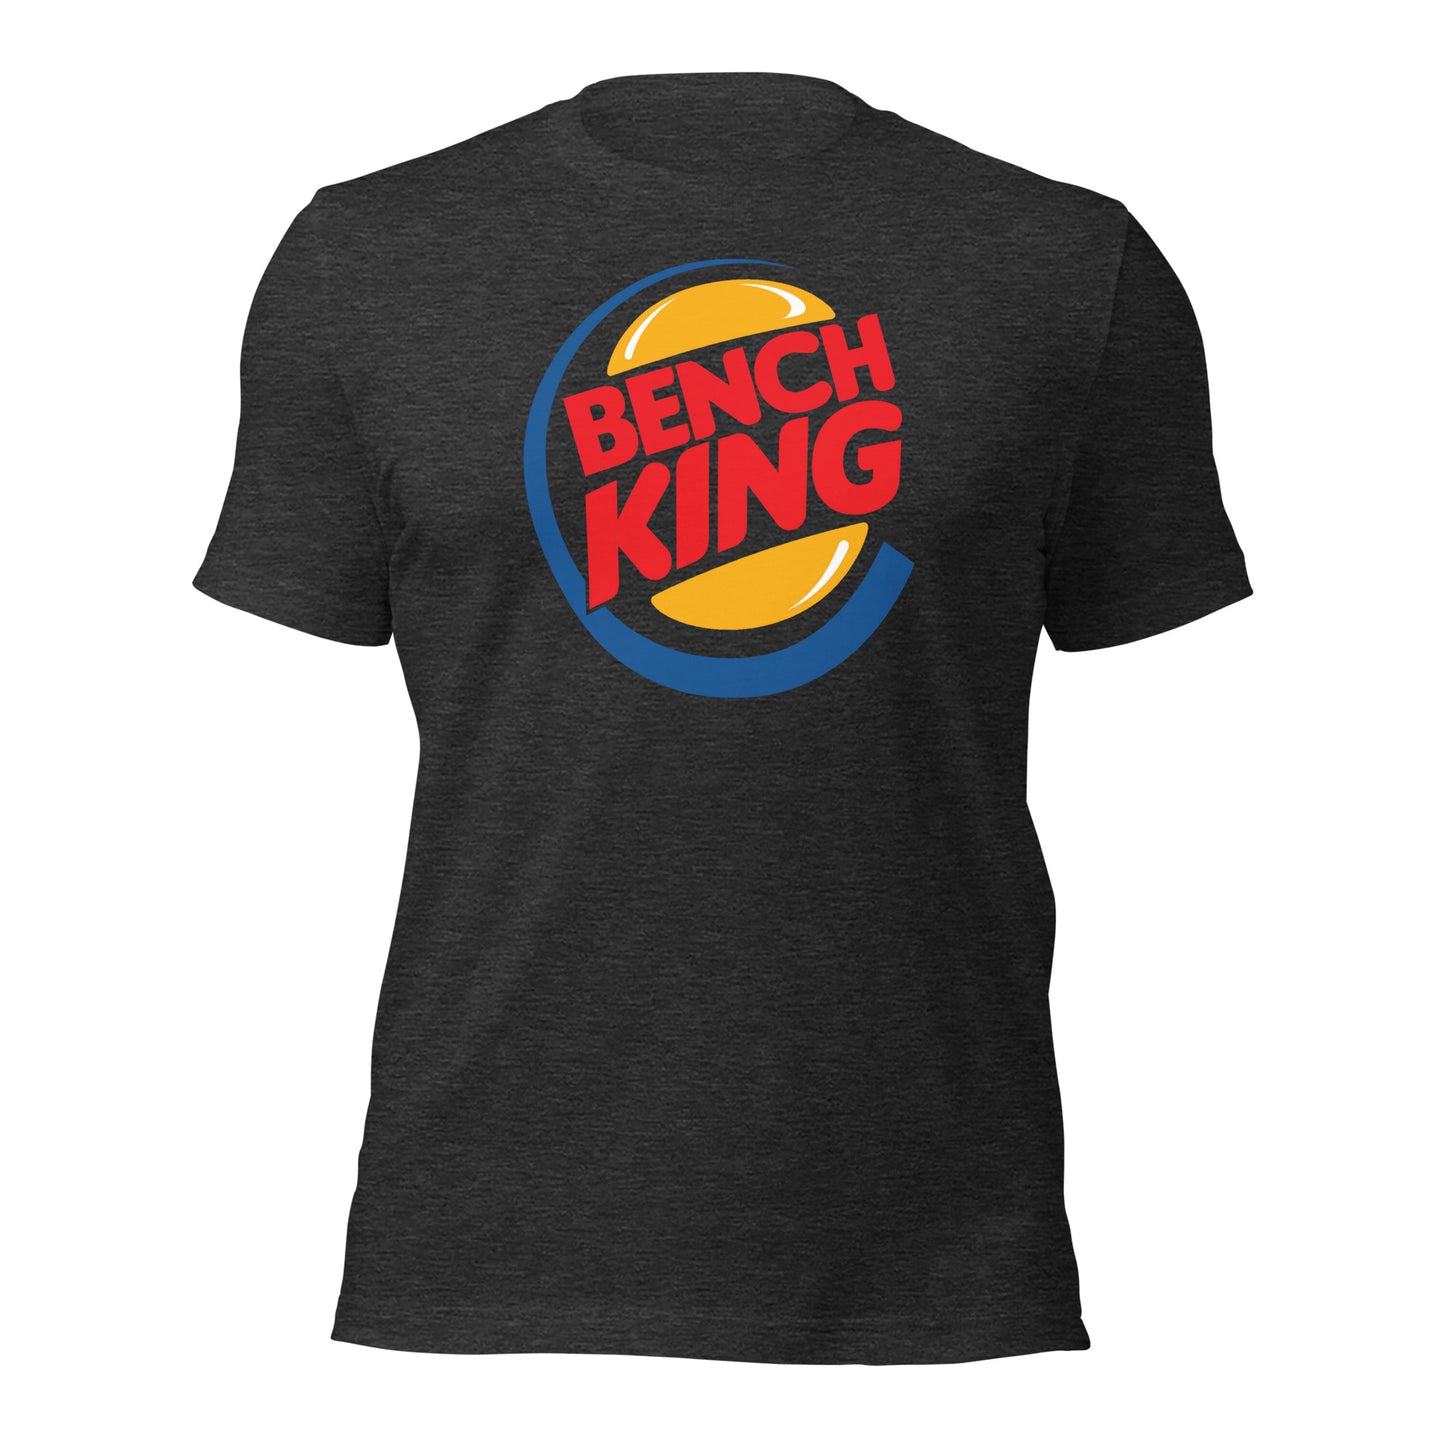 Bench King t-shirt